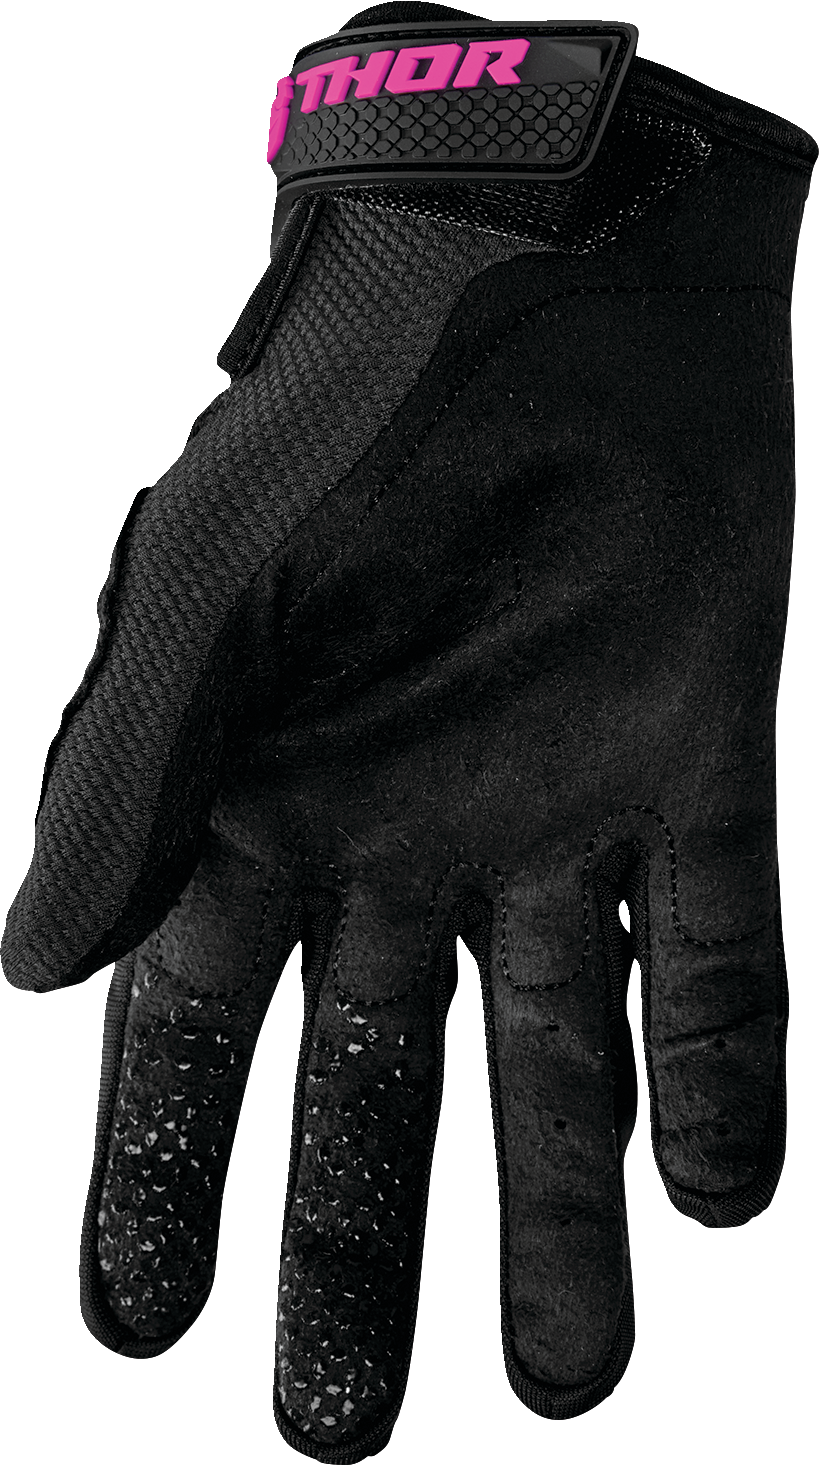 THOR Women's Sector Gloves - Black/Pink - XL 3331-0245